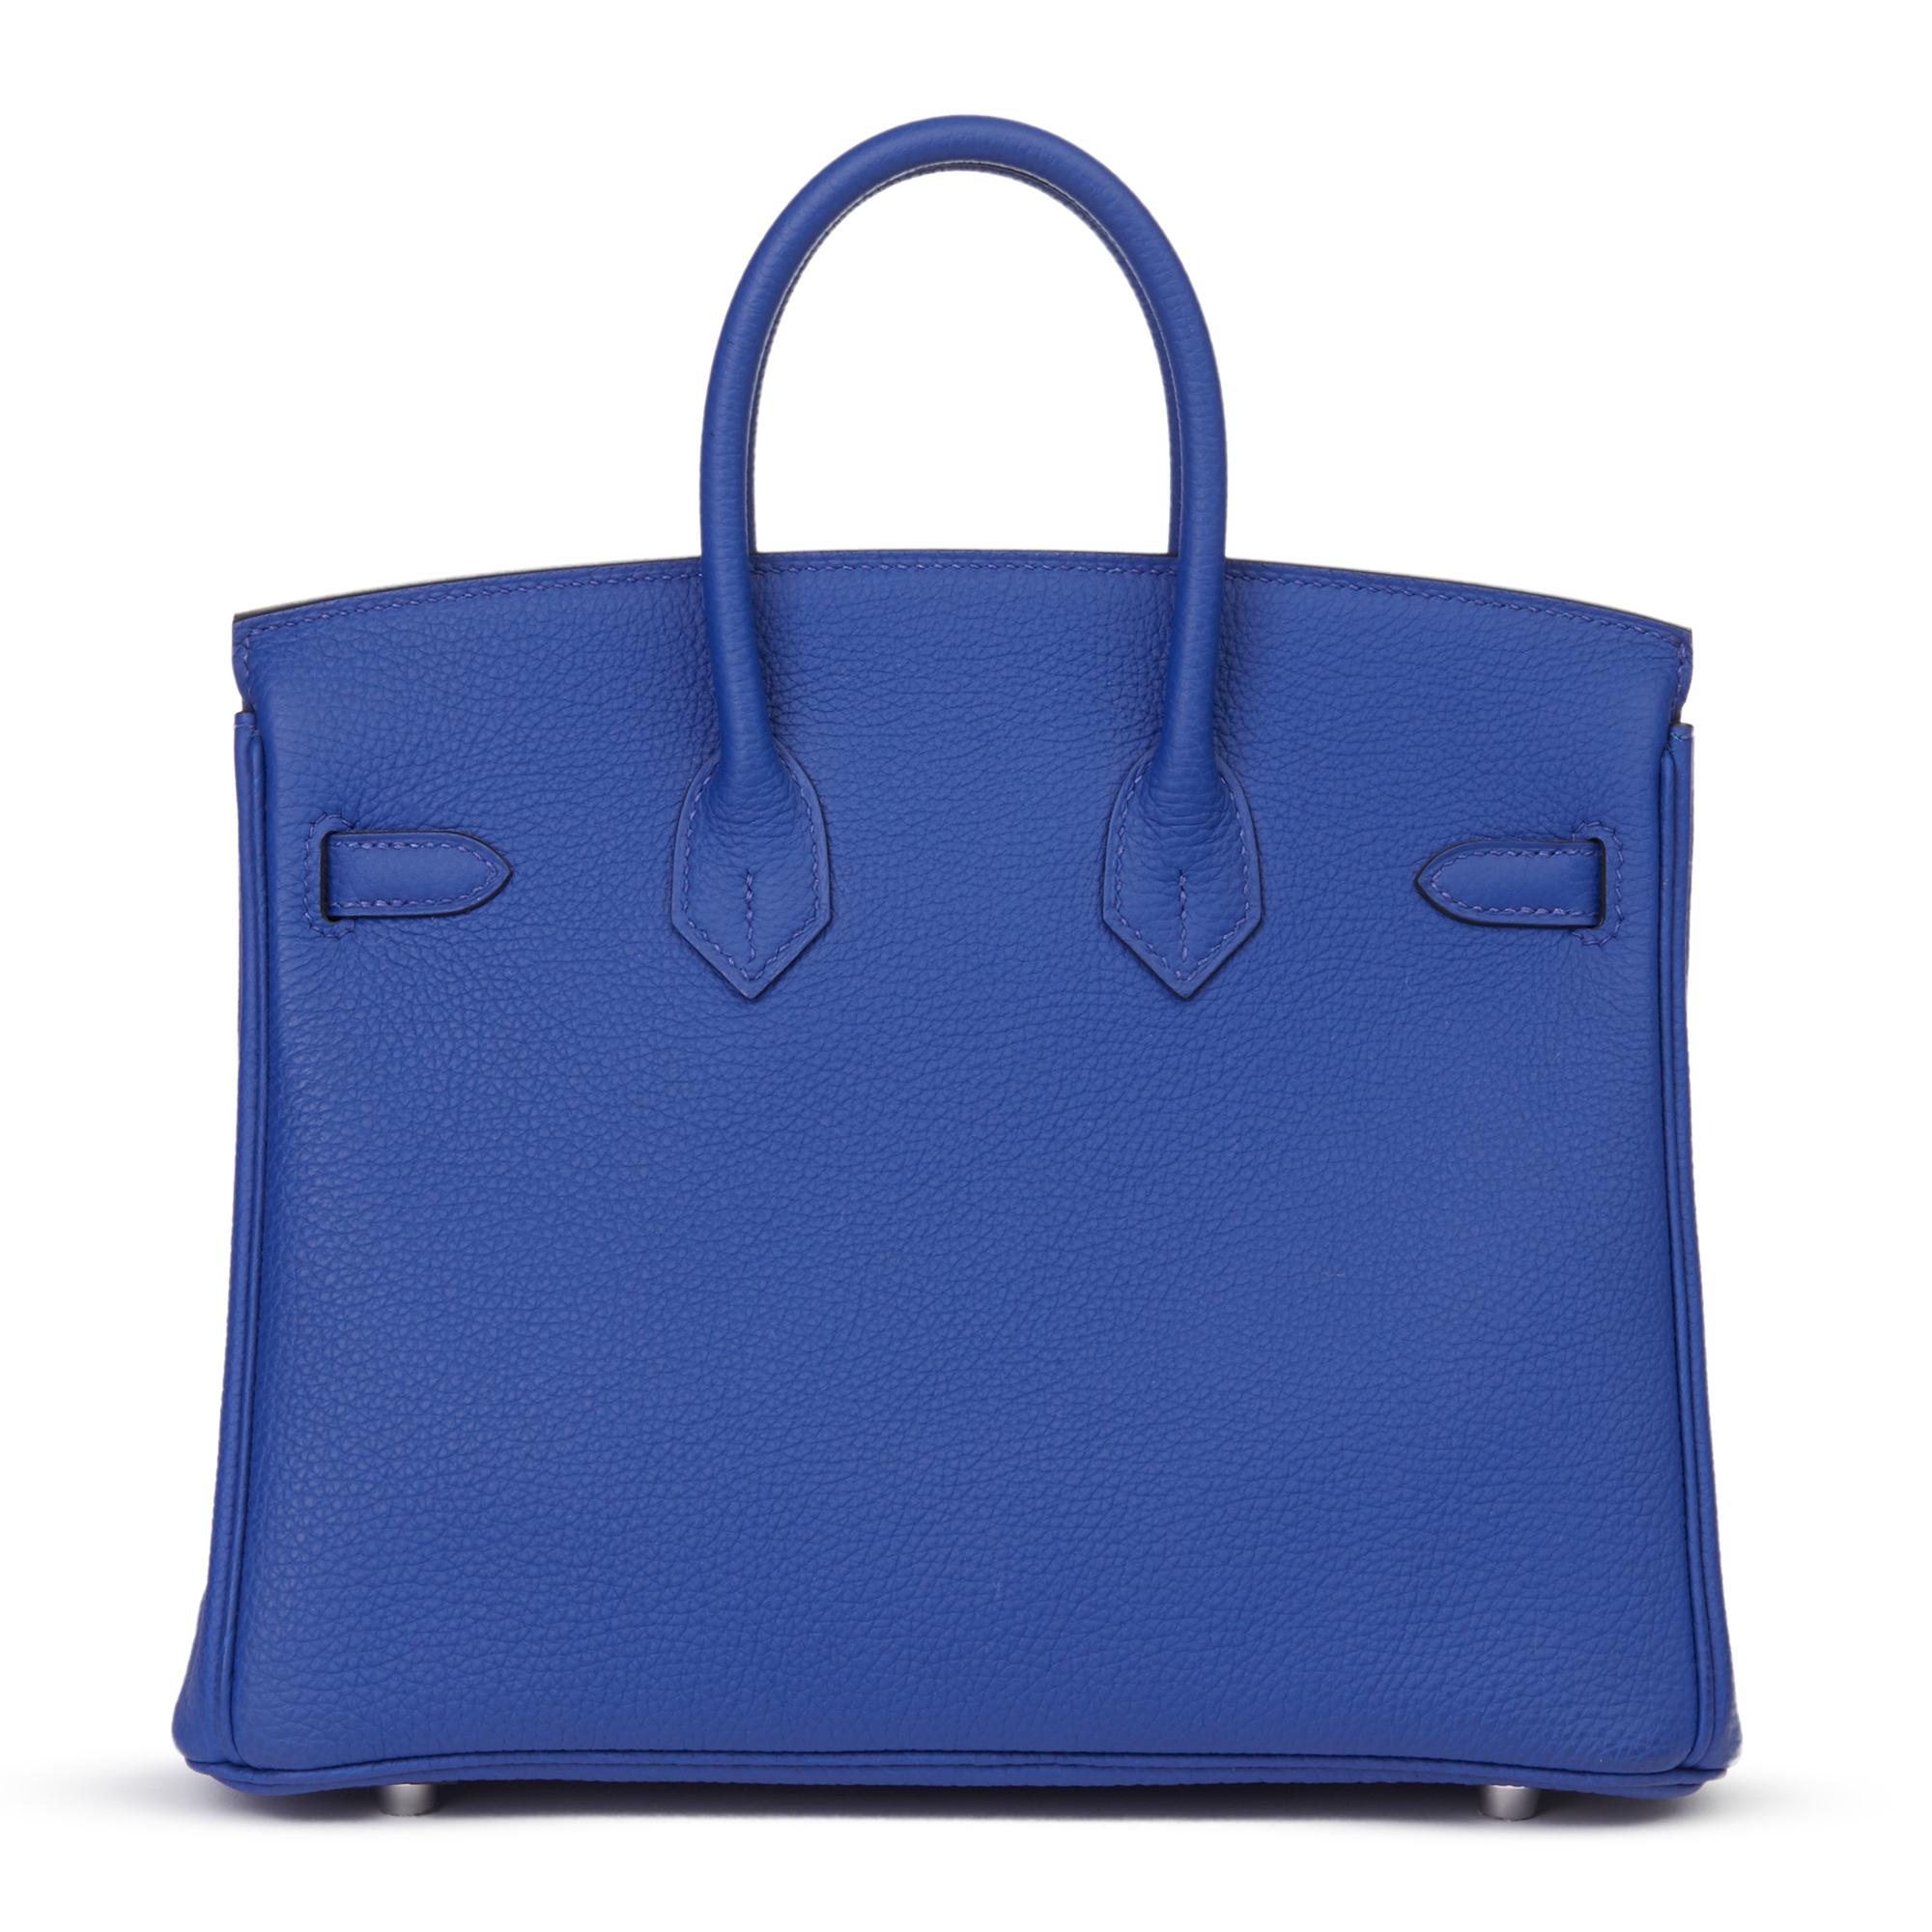 2016 Hermès Blue Electric Togo Leather Birkin 25cm 1